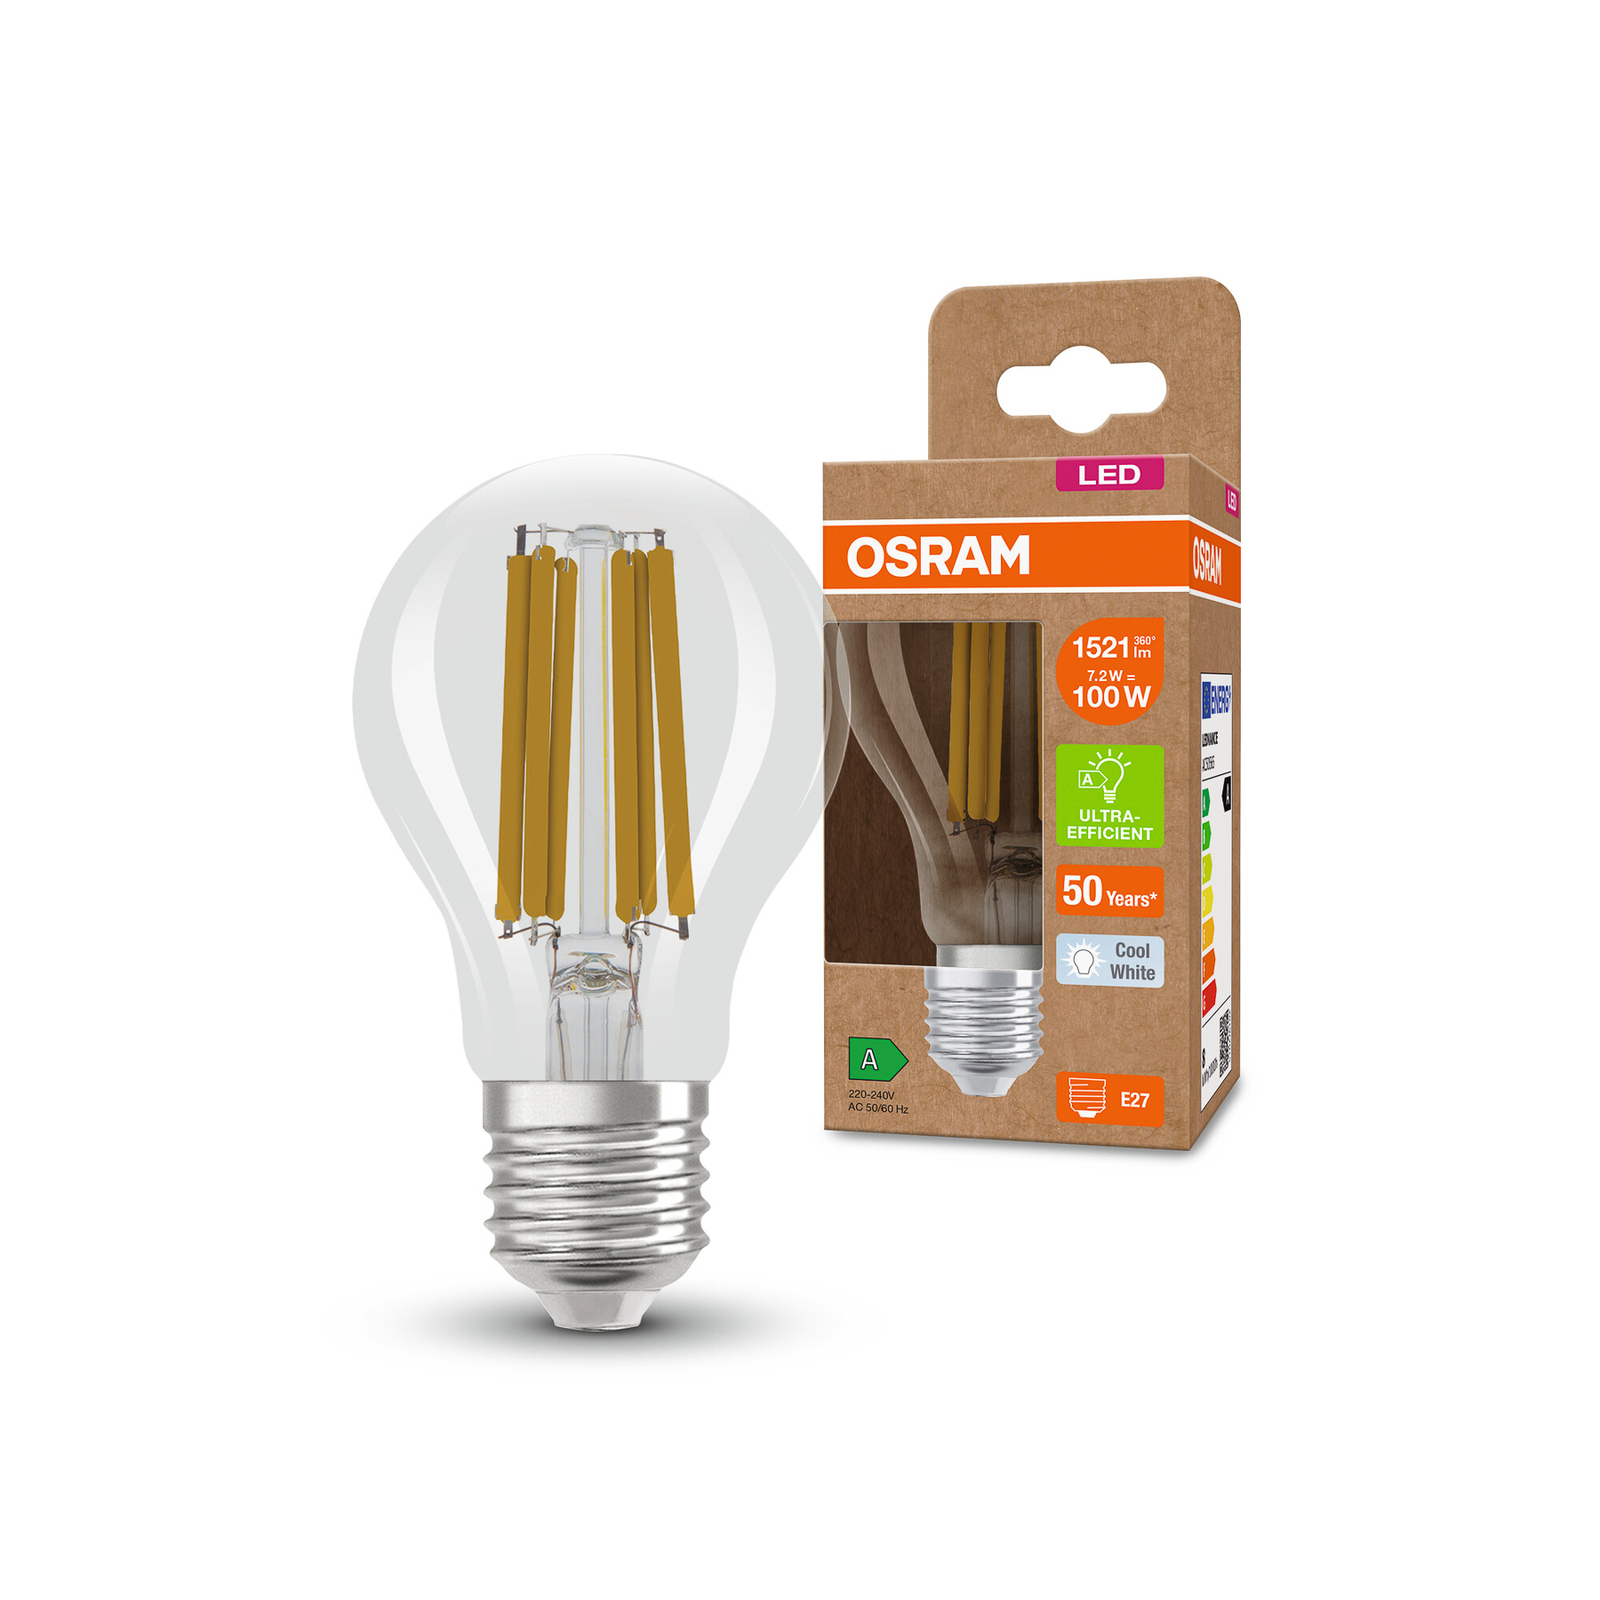 OSRAM LED Classic, filament, E27, 7.2 W, 1,521 lm, 4,000 K